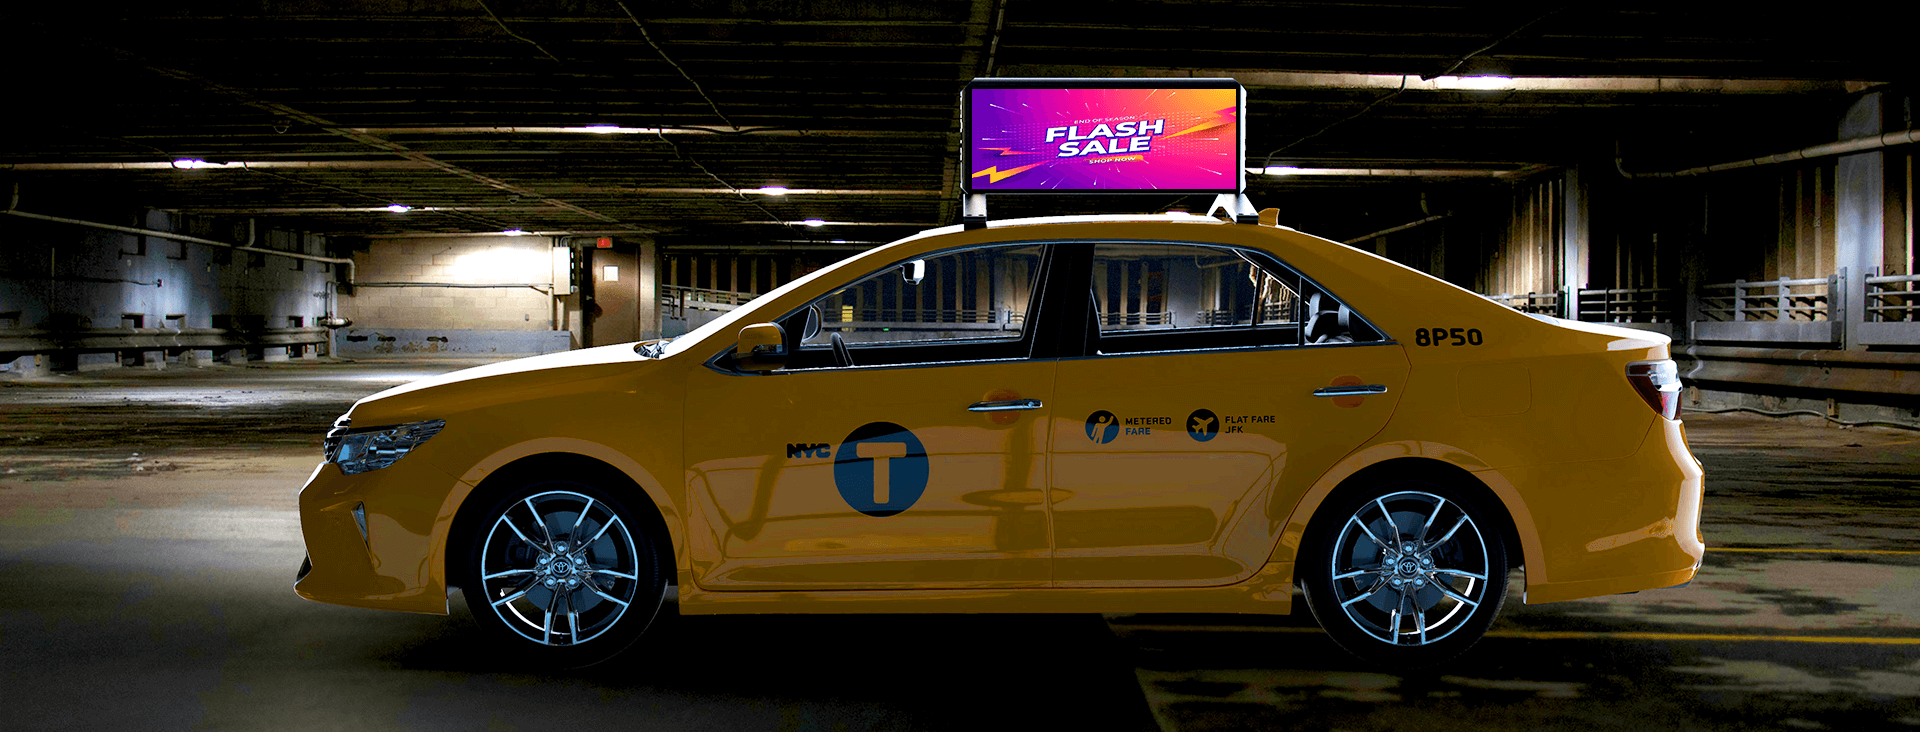 Taxi Top LED Display